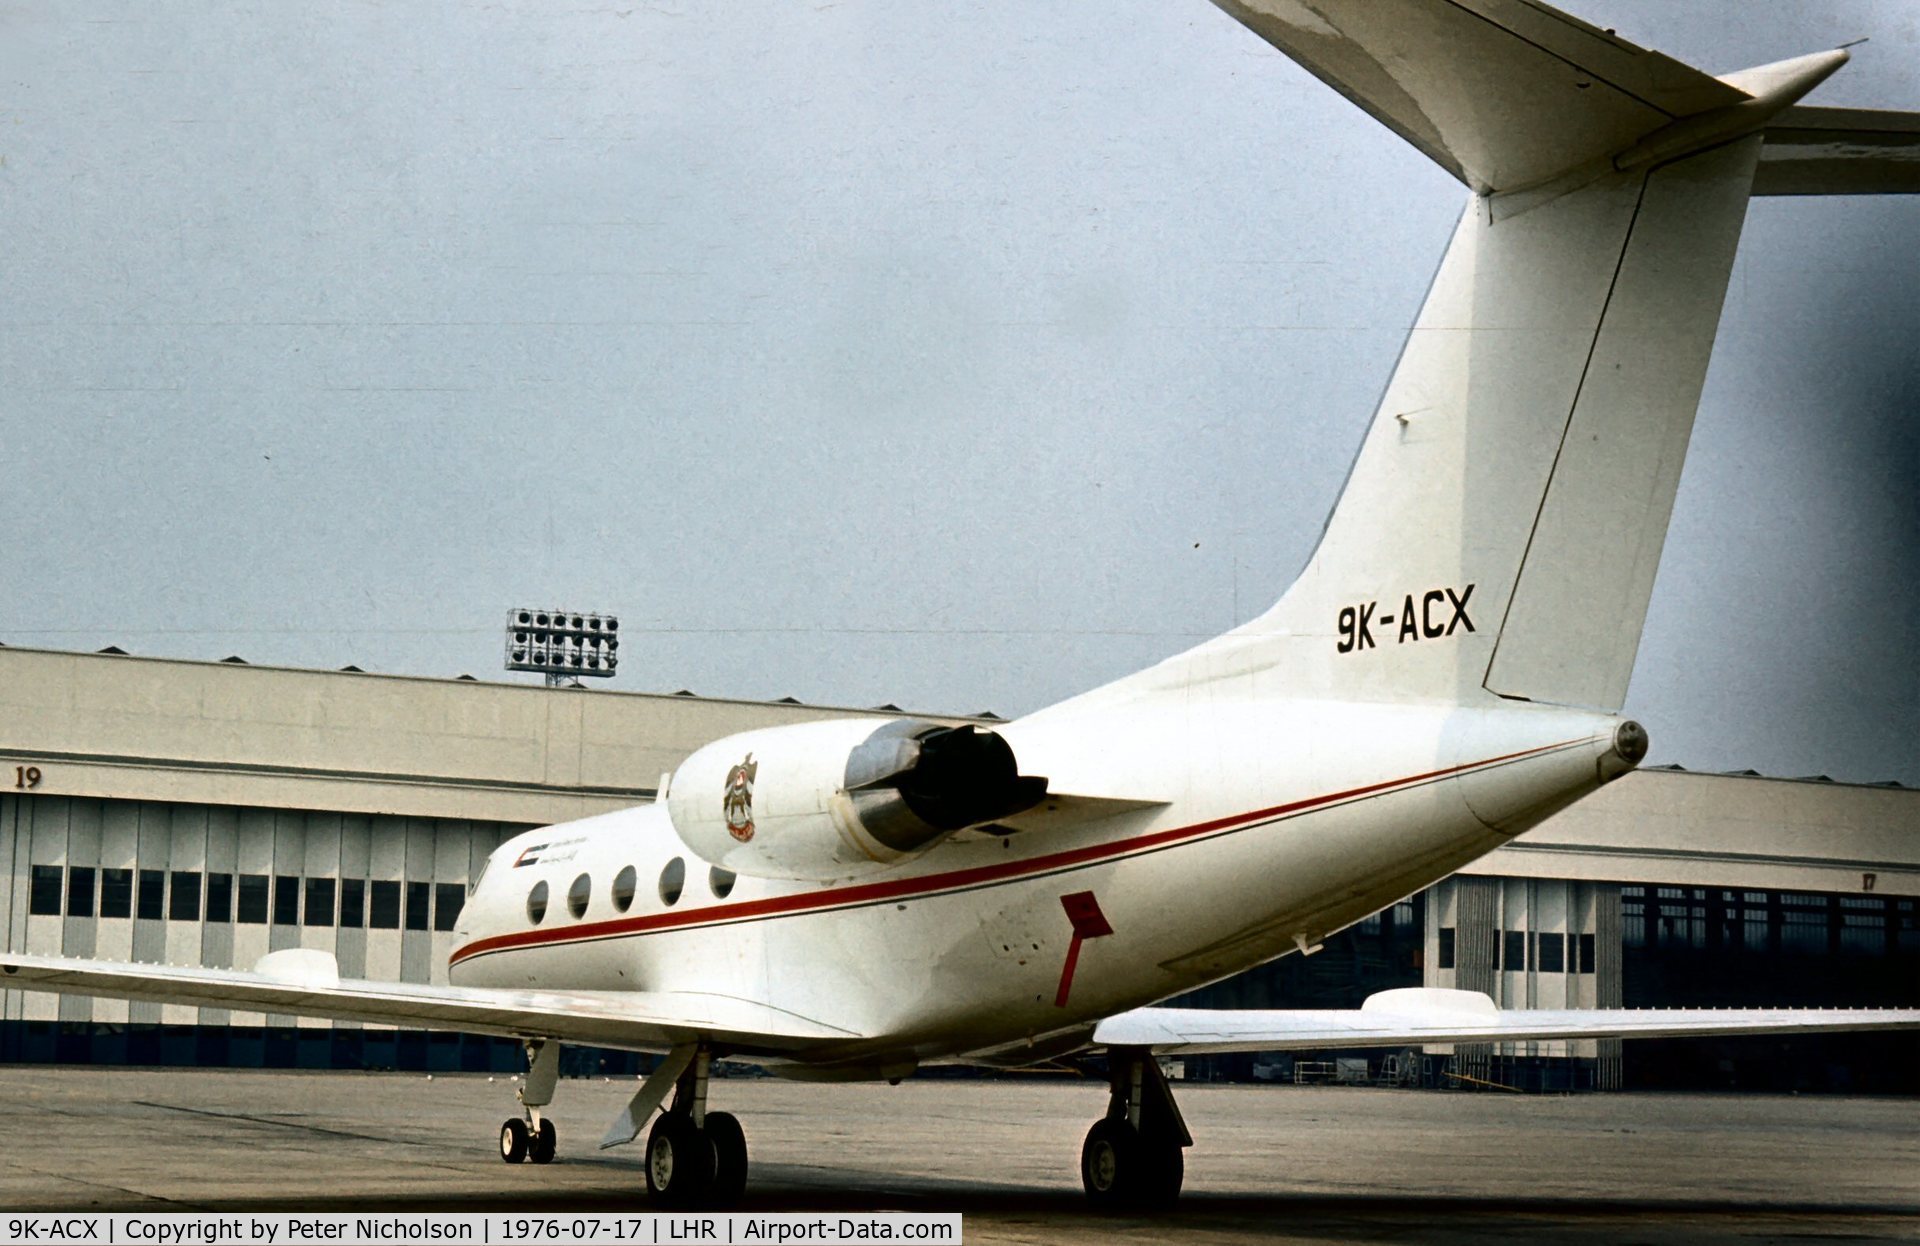 9K-ACX, 1975 Grumman G-1159 Gulfstream II C/N 164, Kuwaiti Government aircraft seen at London Heathrow in the Summer of 1976.